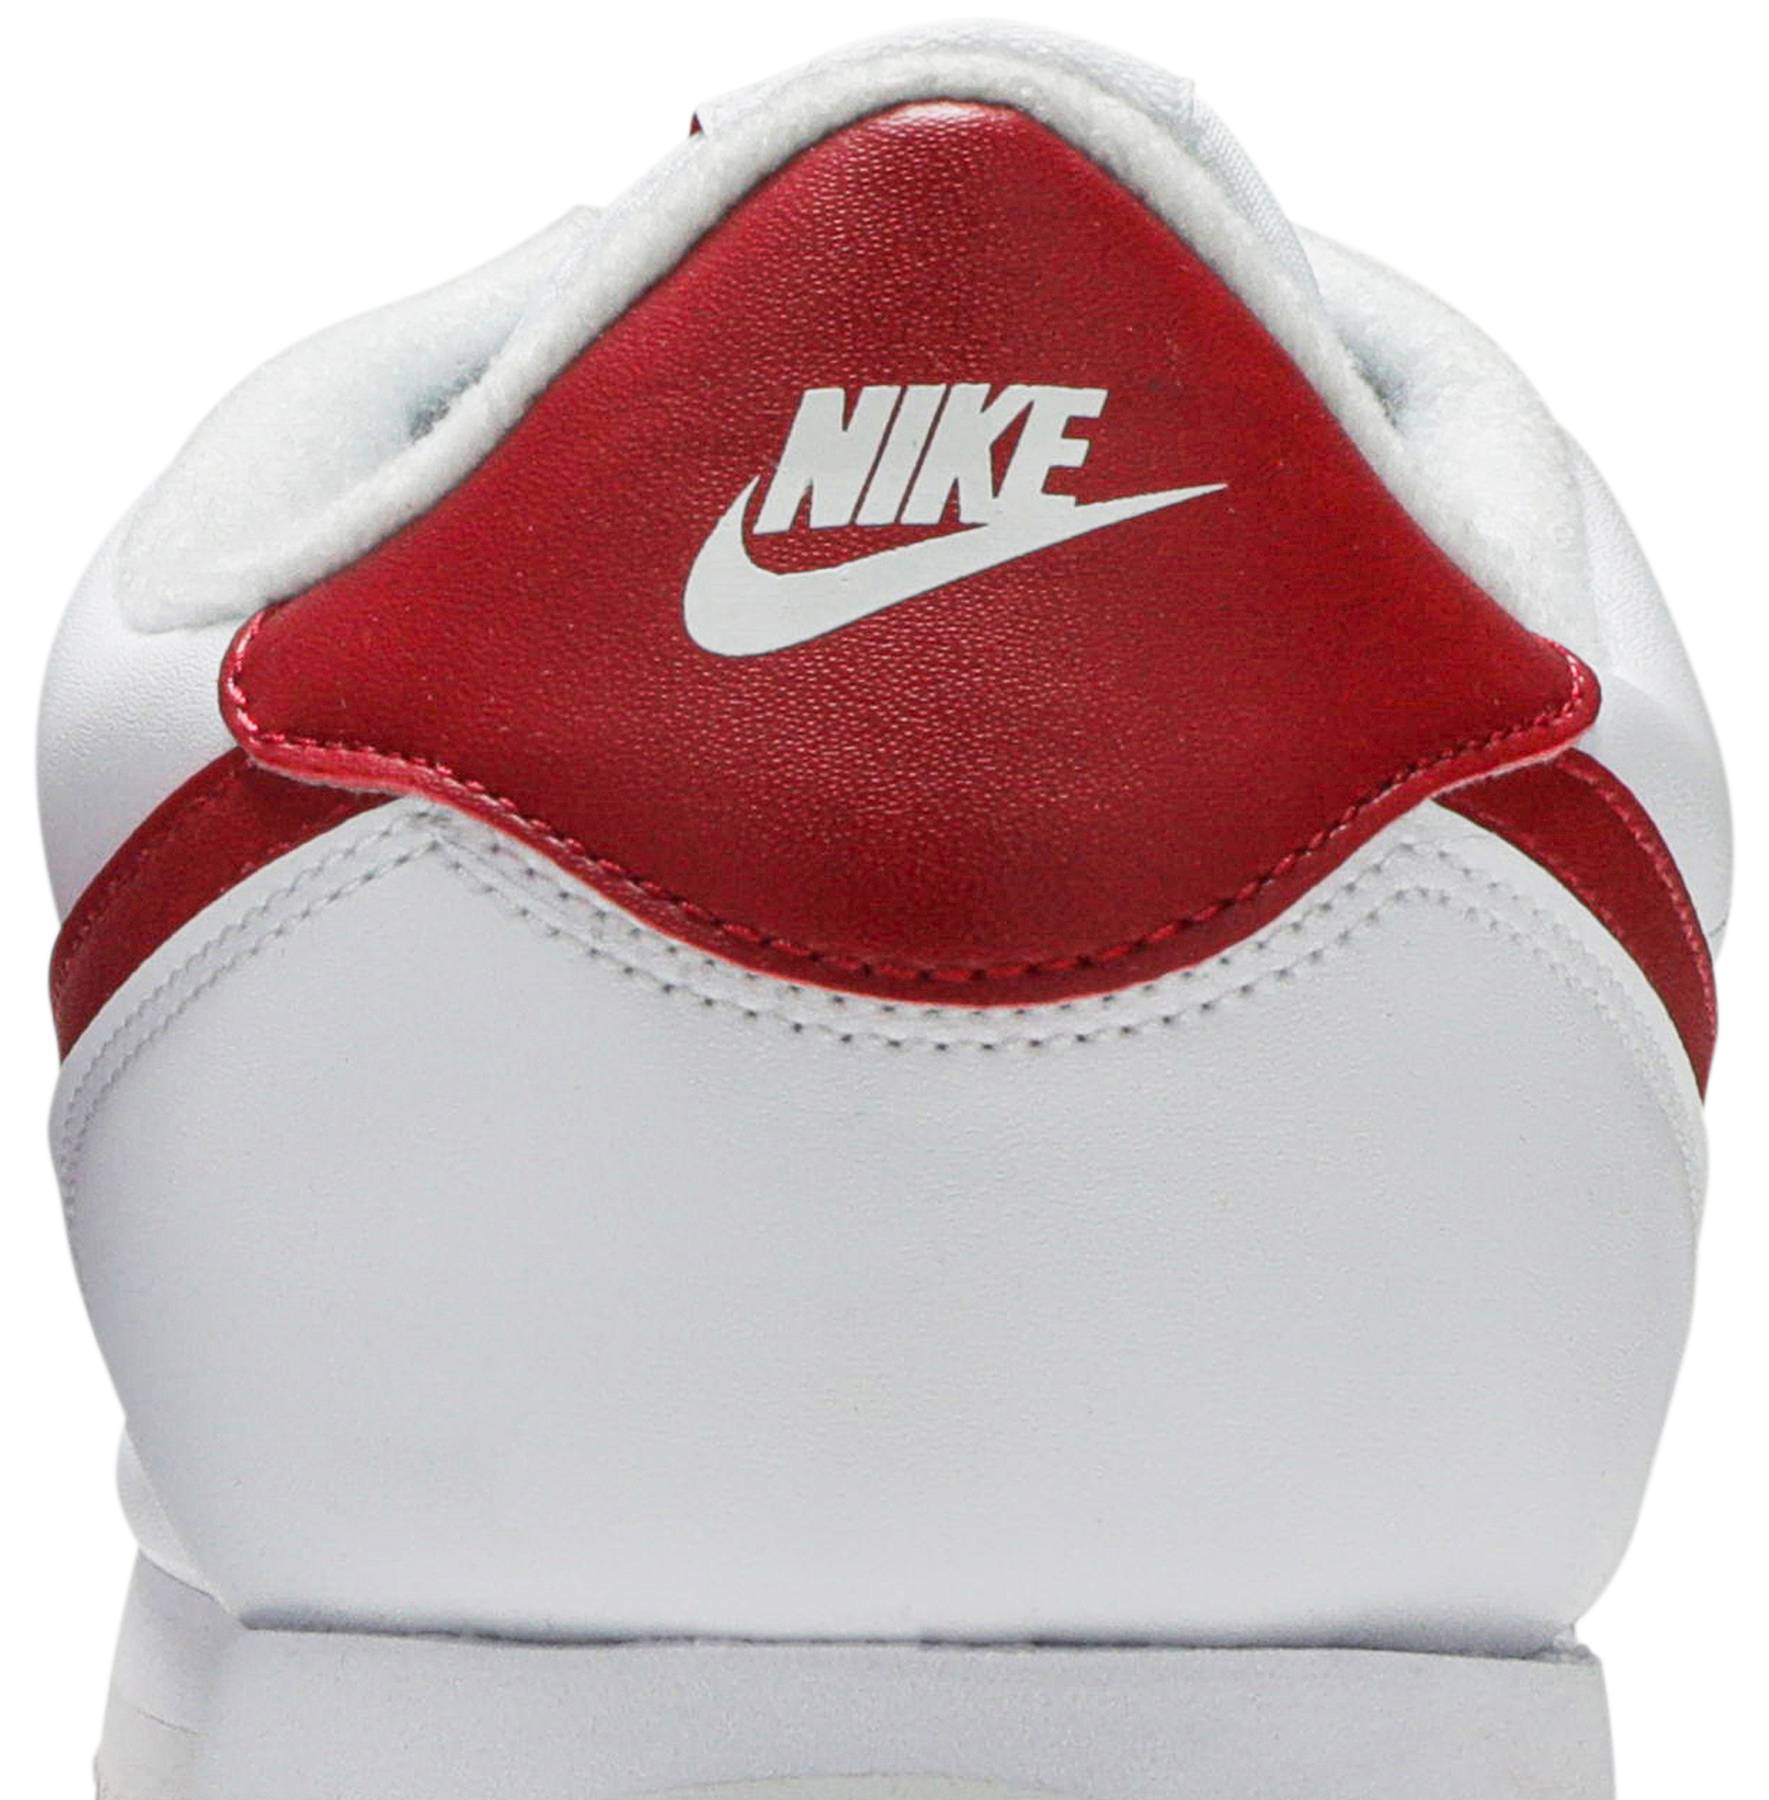 Cortez Basic 'White Varsity Red' - Nike - 819719 103 | GOAT